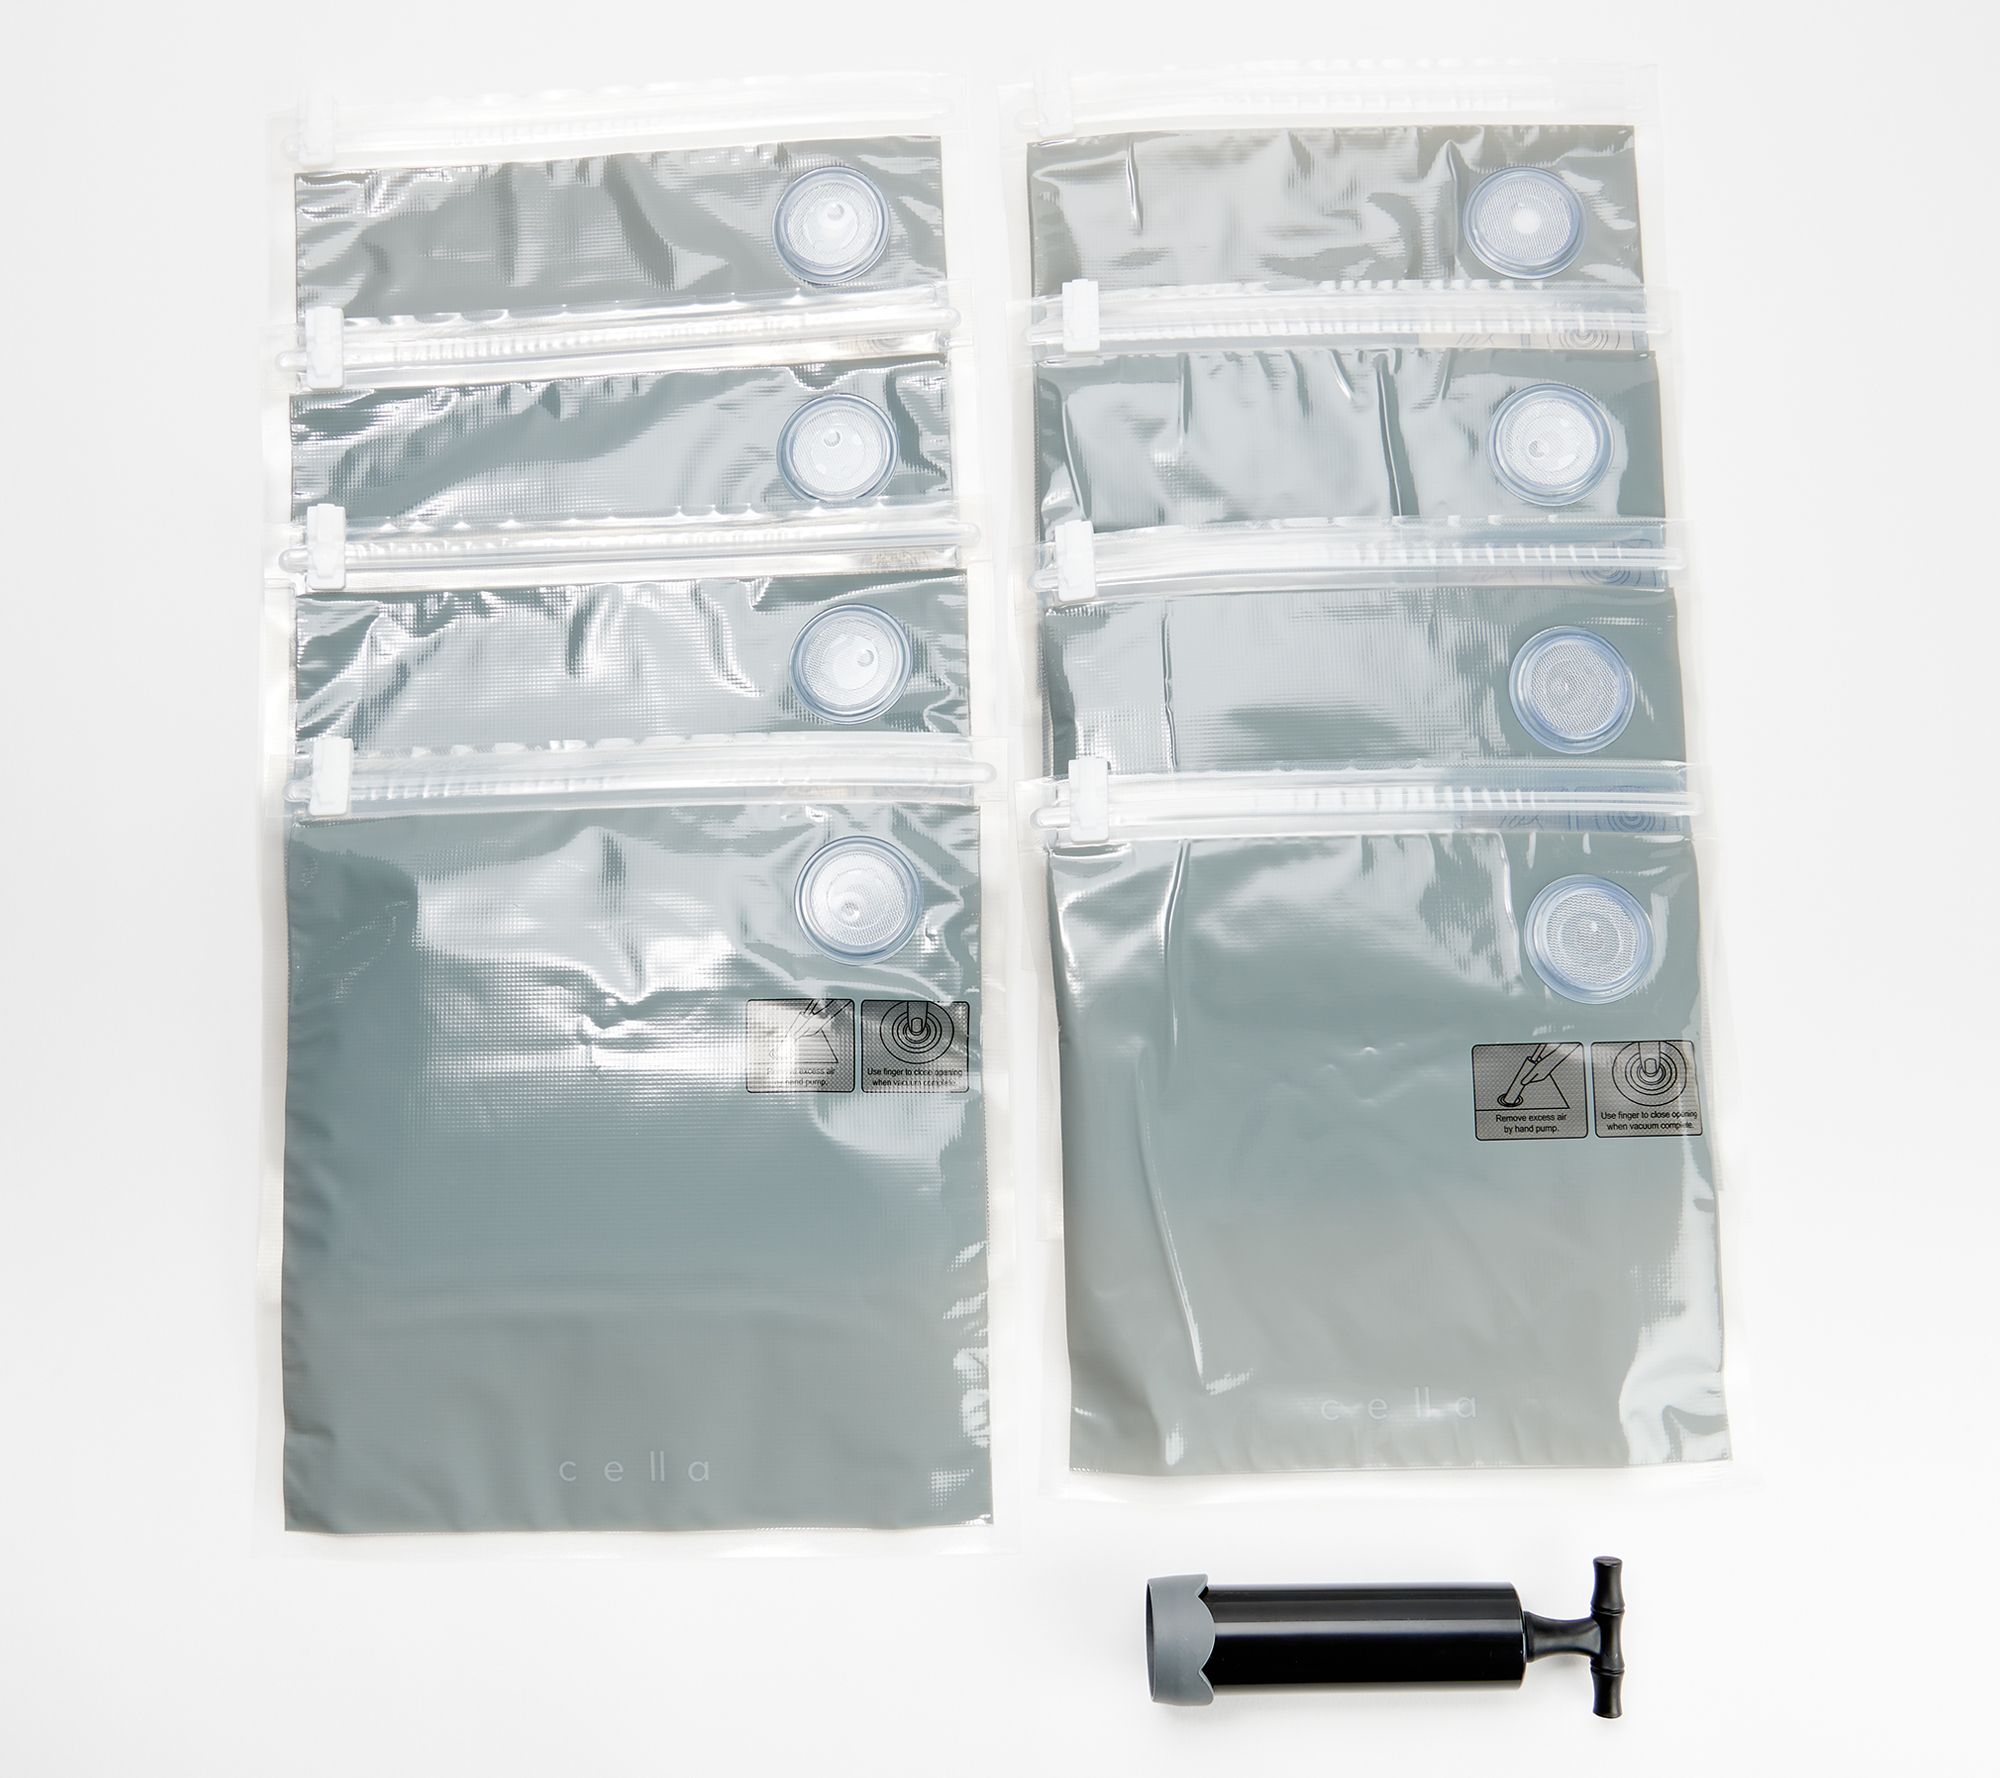 FoodSaver Reusable Gallon Vacuum Zipper Bags (8-Count) - Power Townsend  Company